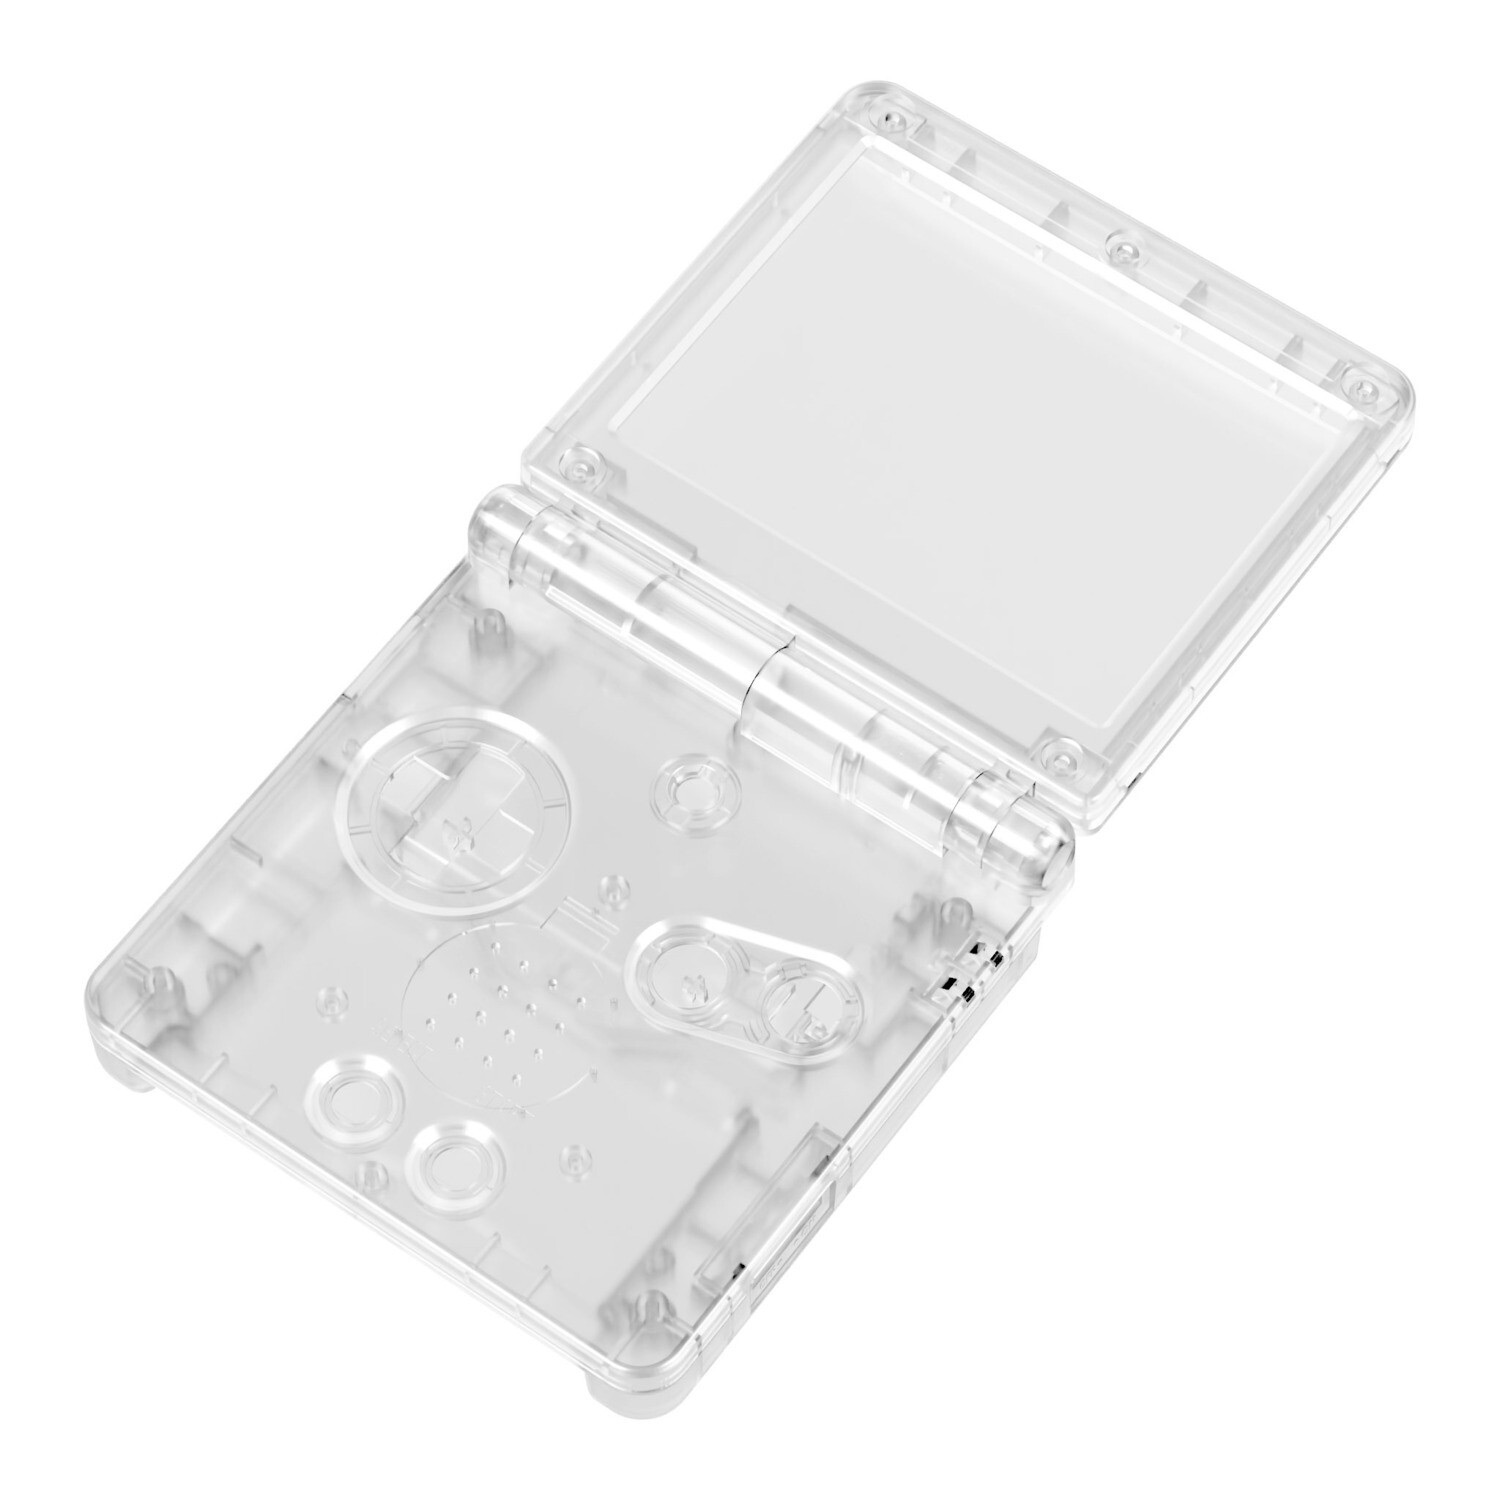 Game Boy Advance SP Etui (Transparant)